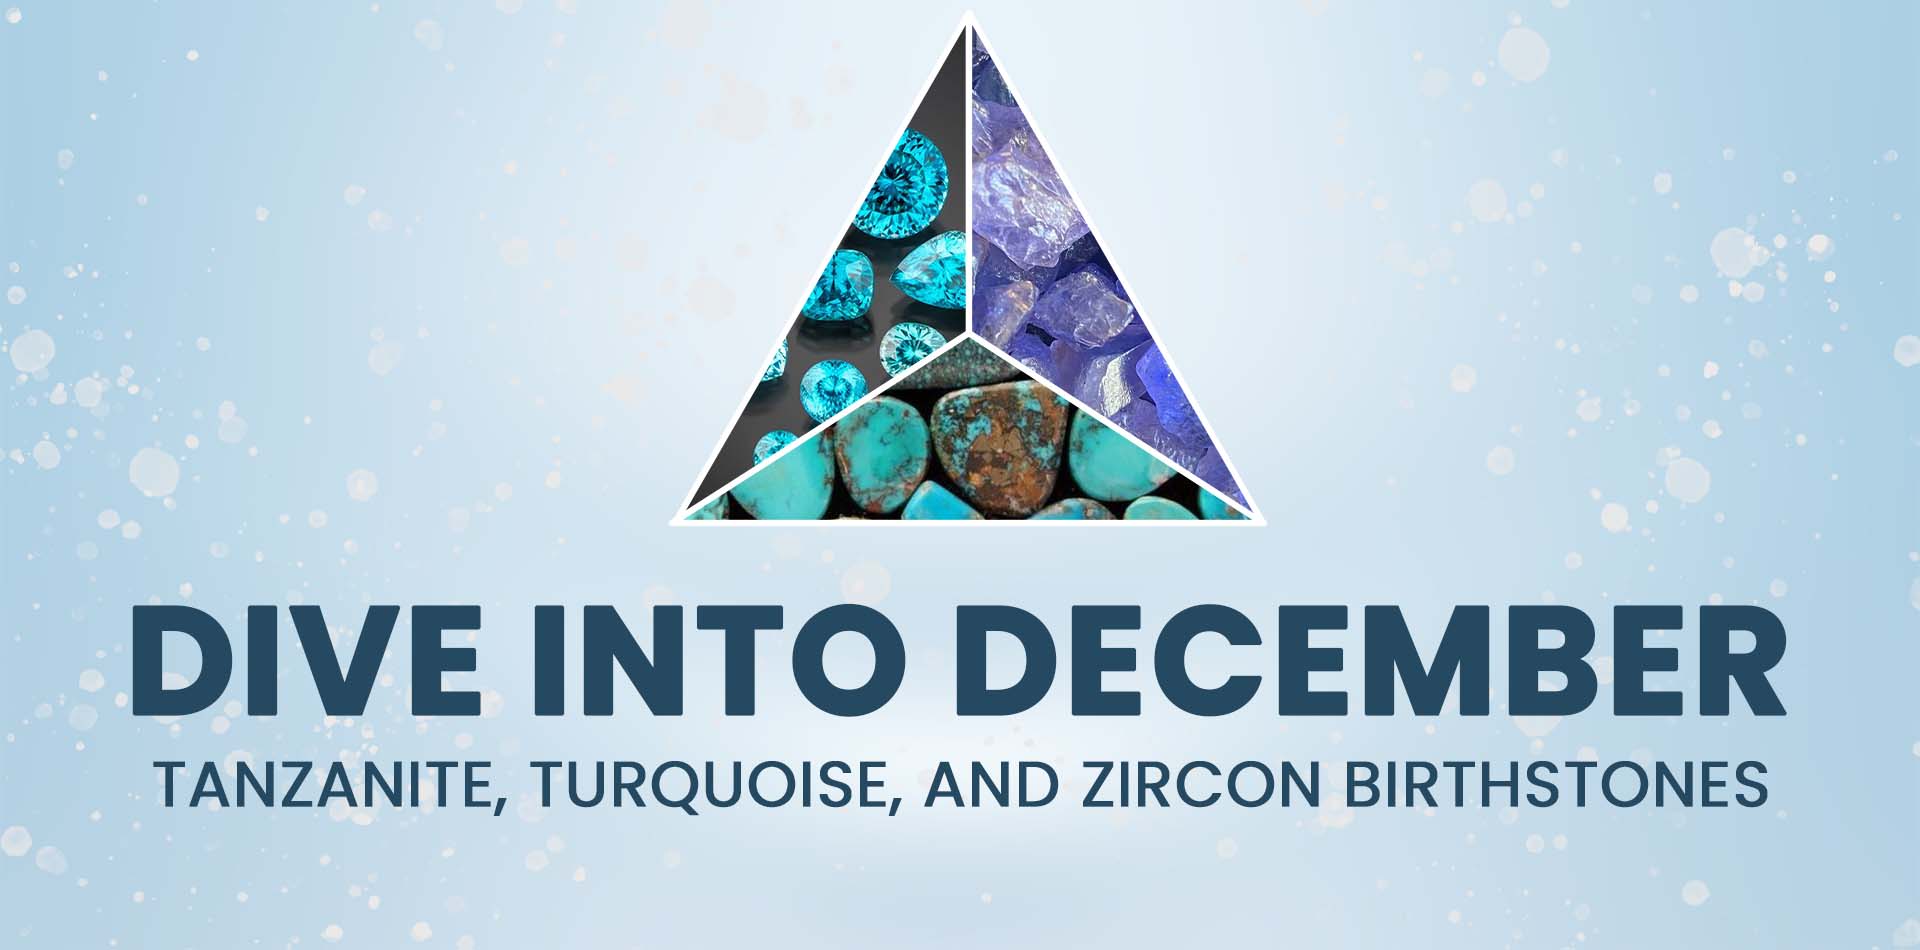 Dive into December: Tanzanite, Turquoise, and Zircon Birthstones